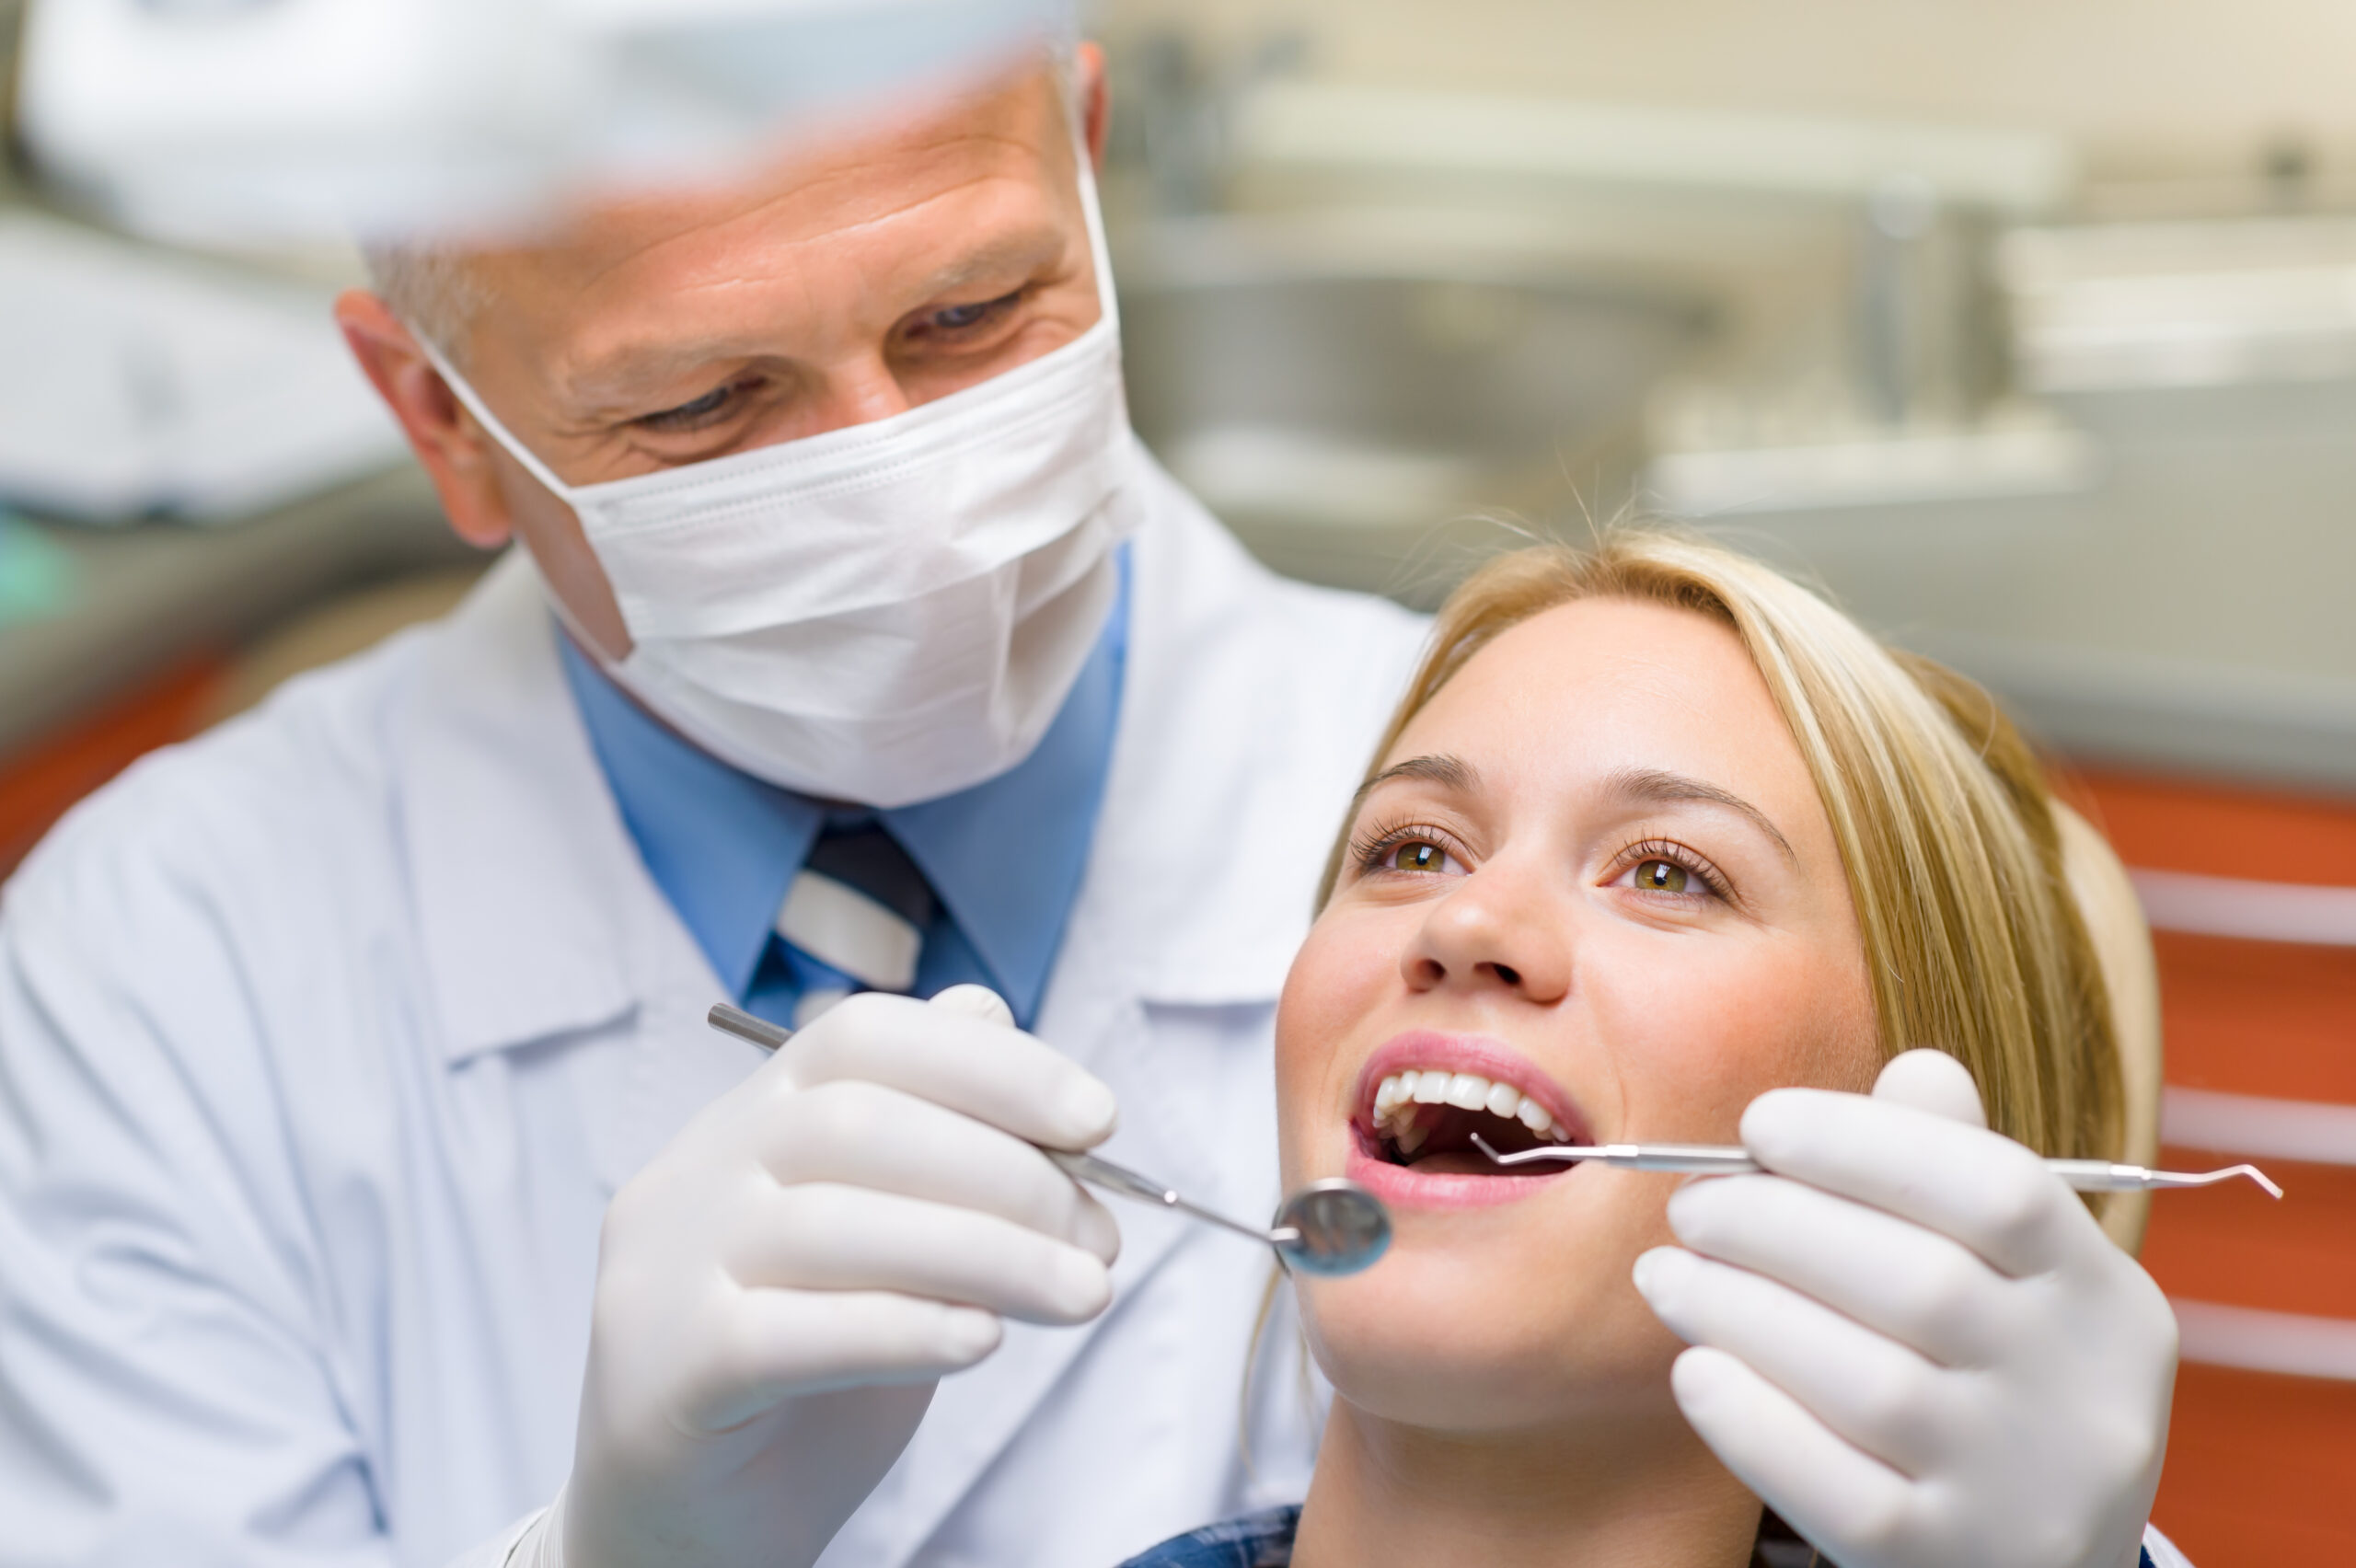 Orthodontics LA - How to Help Ease Orthodontic Anxiety